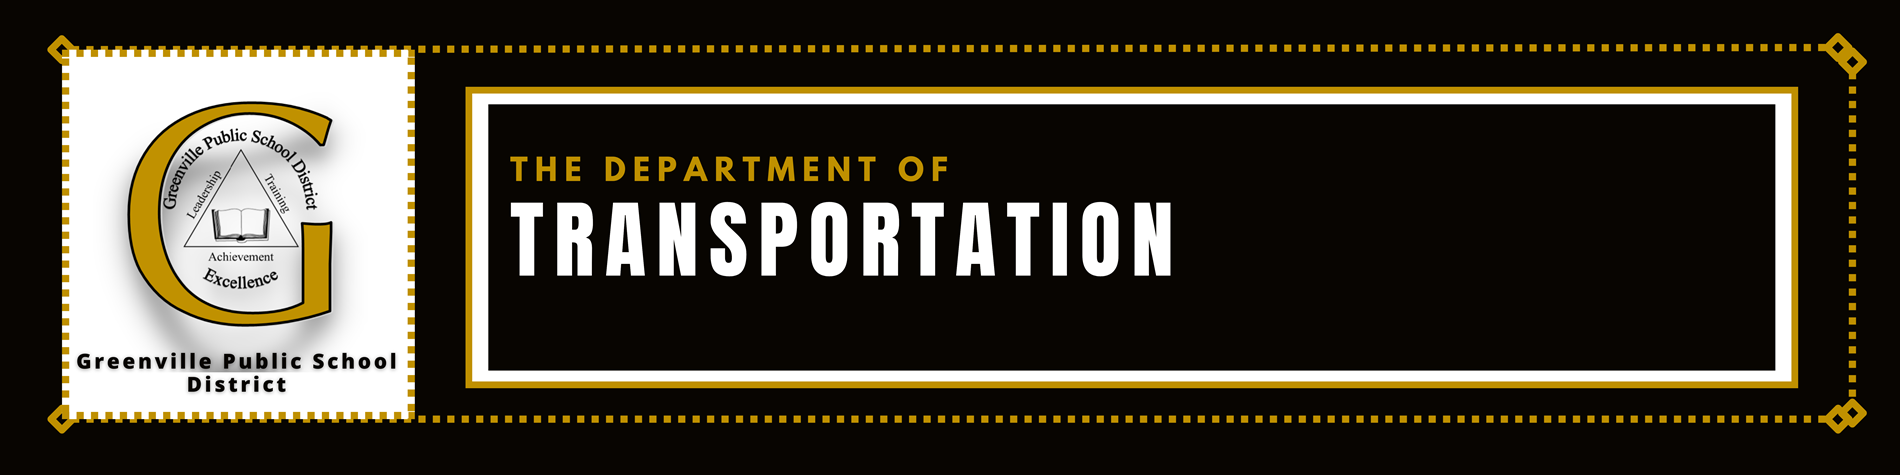 Transportation Banner